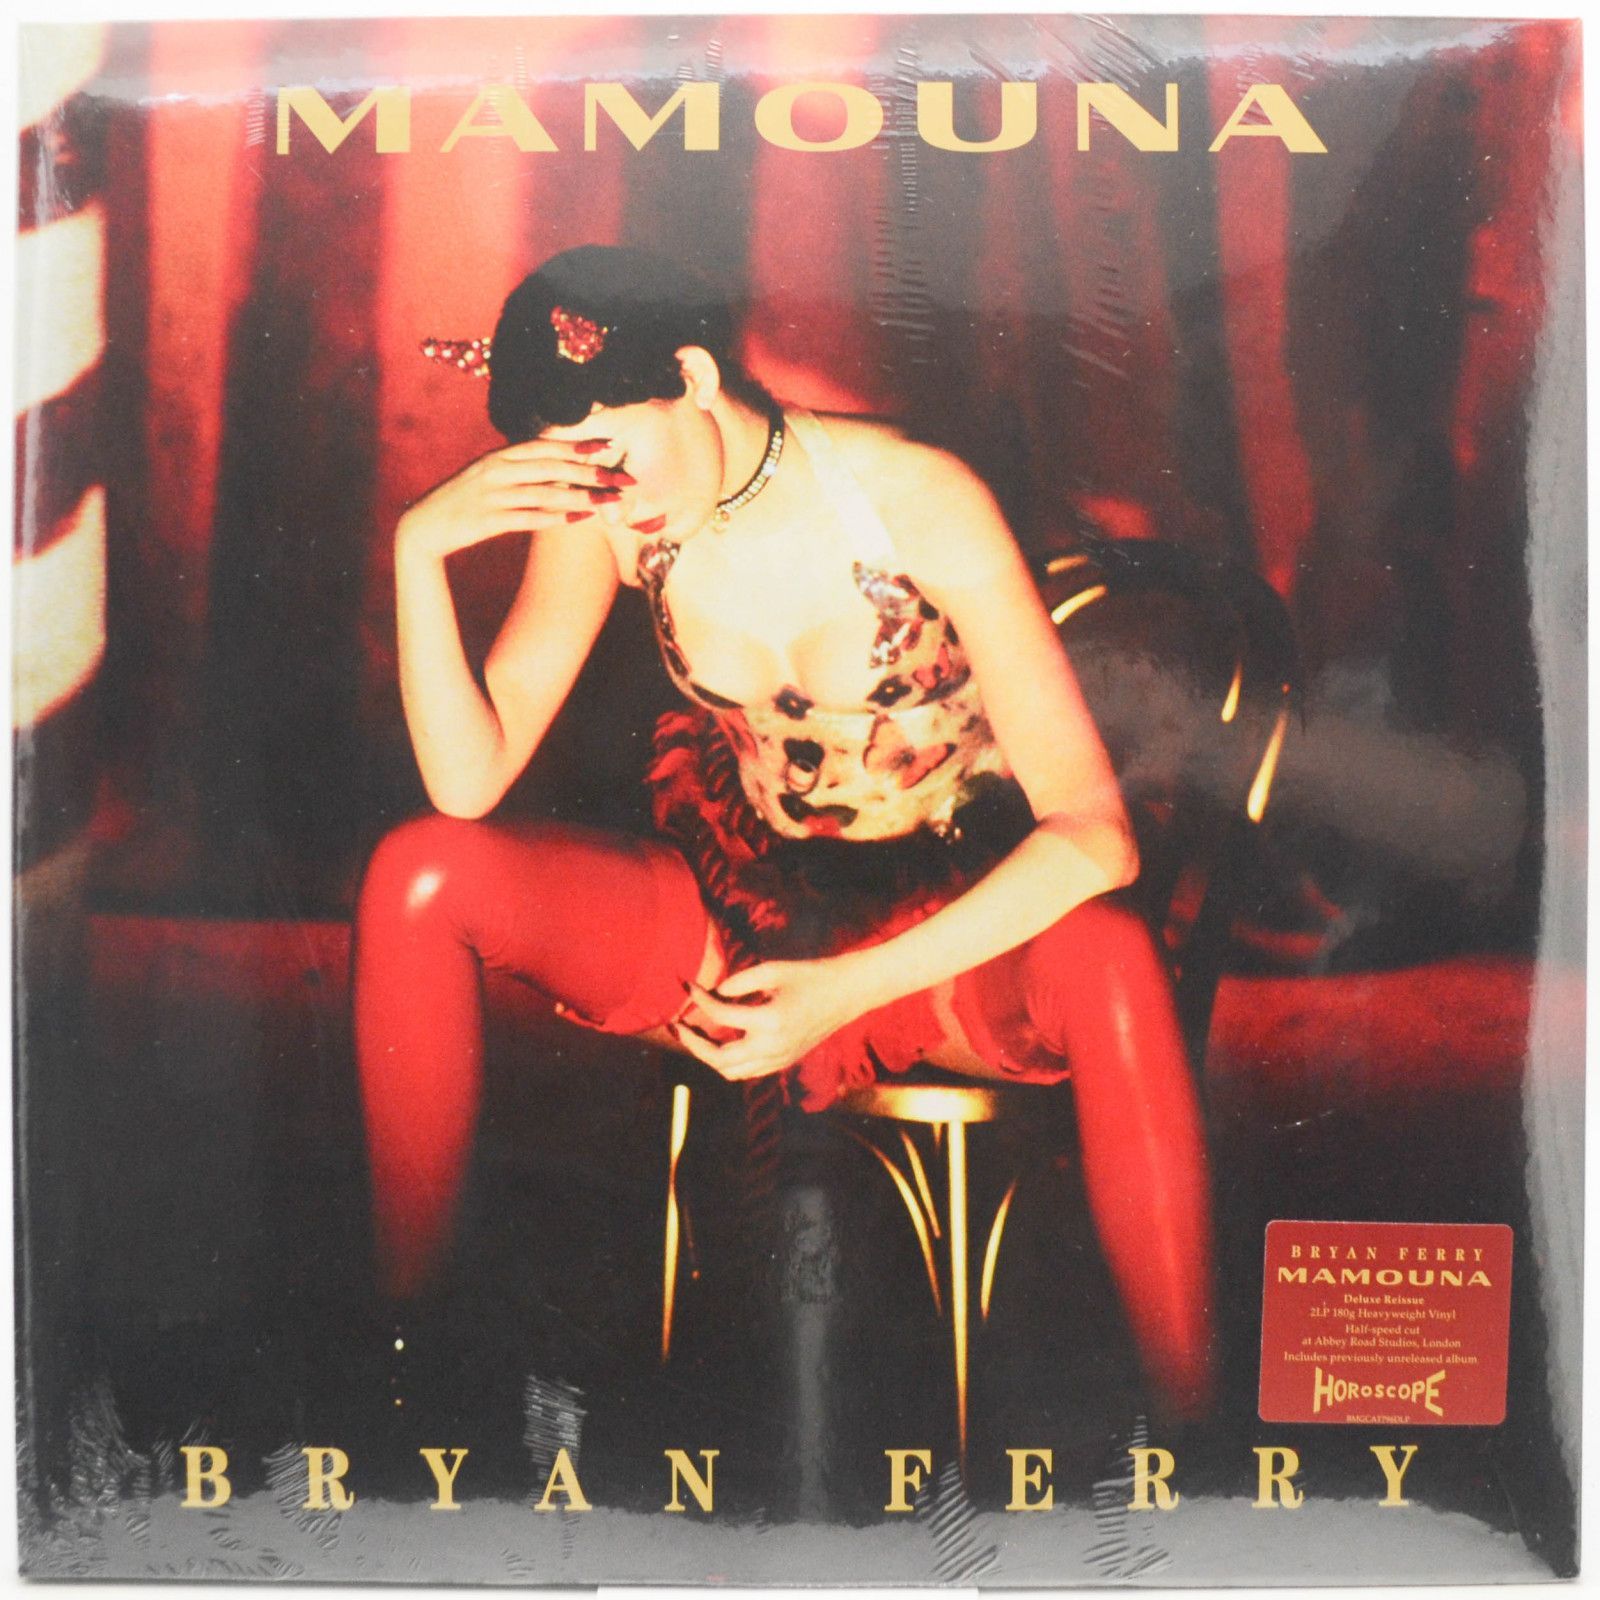 Bryan Ferry — Mamouna (2LP), 1994